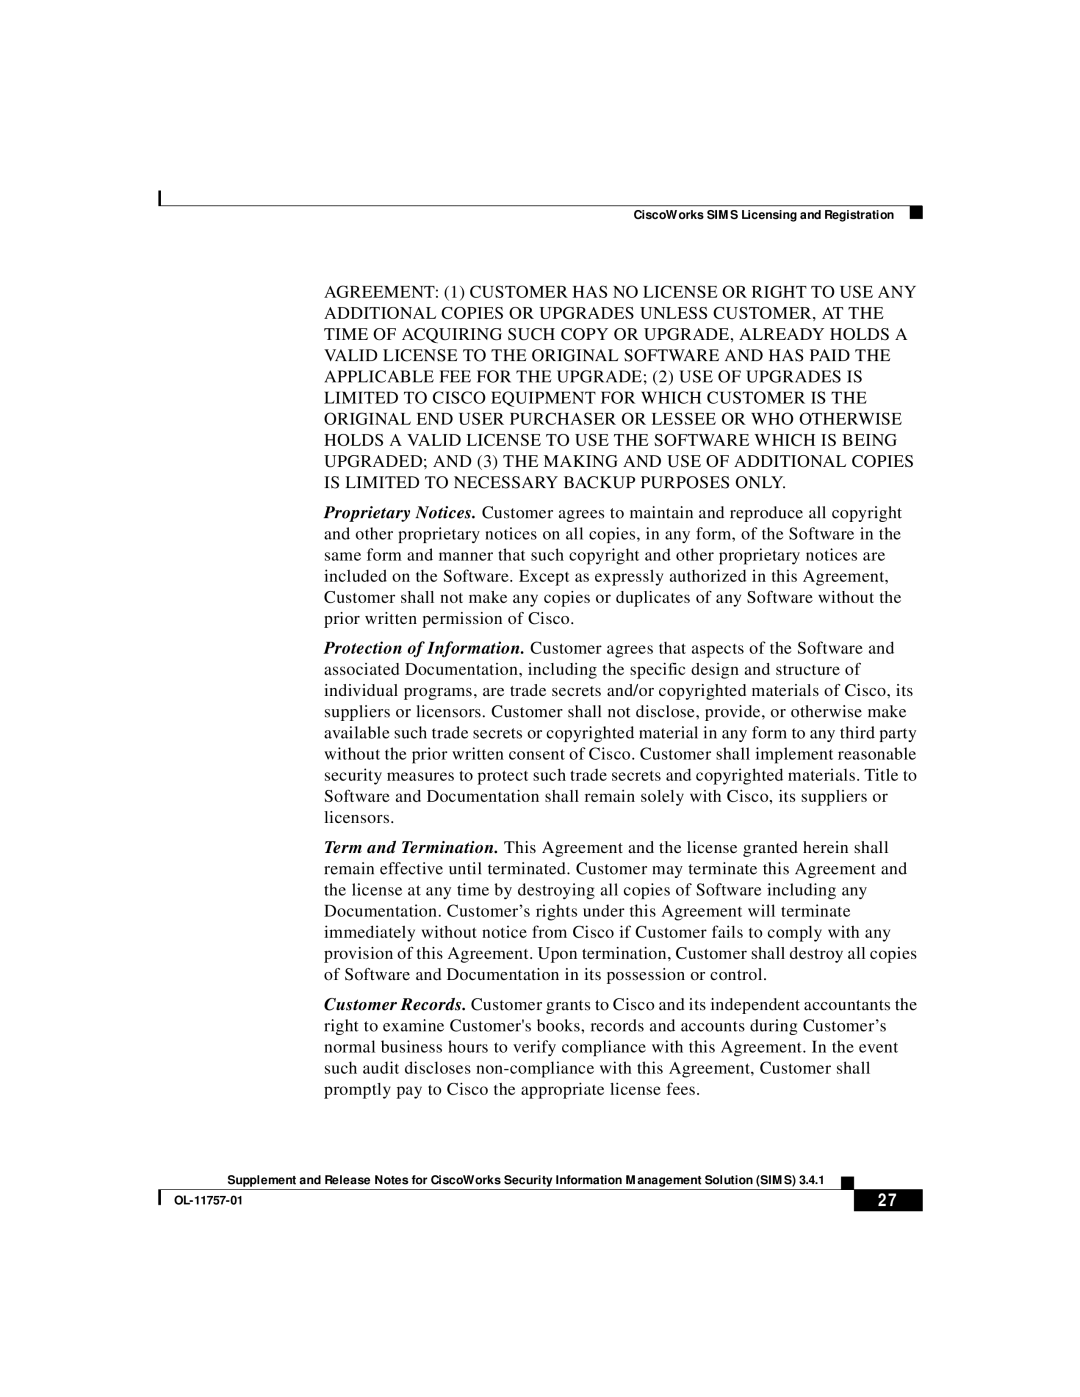 Cisco Systems OL-11757-01 manual 